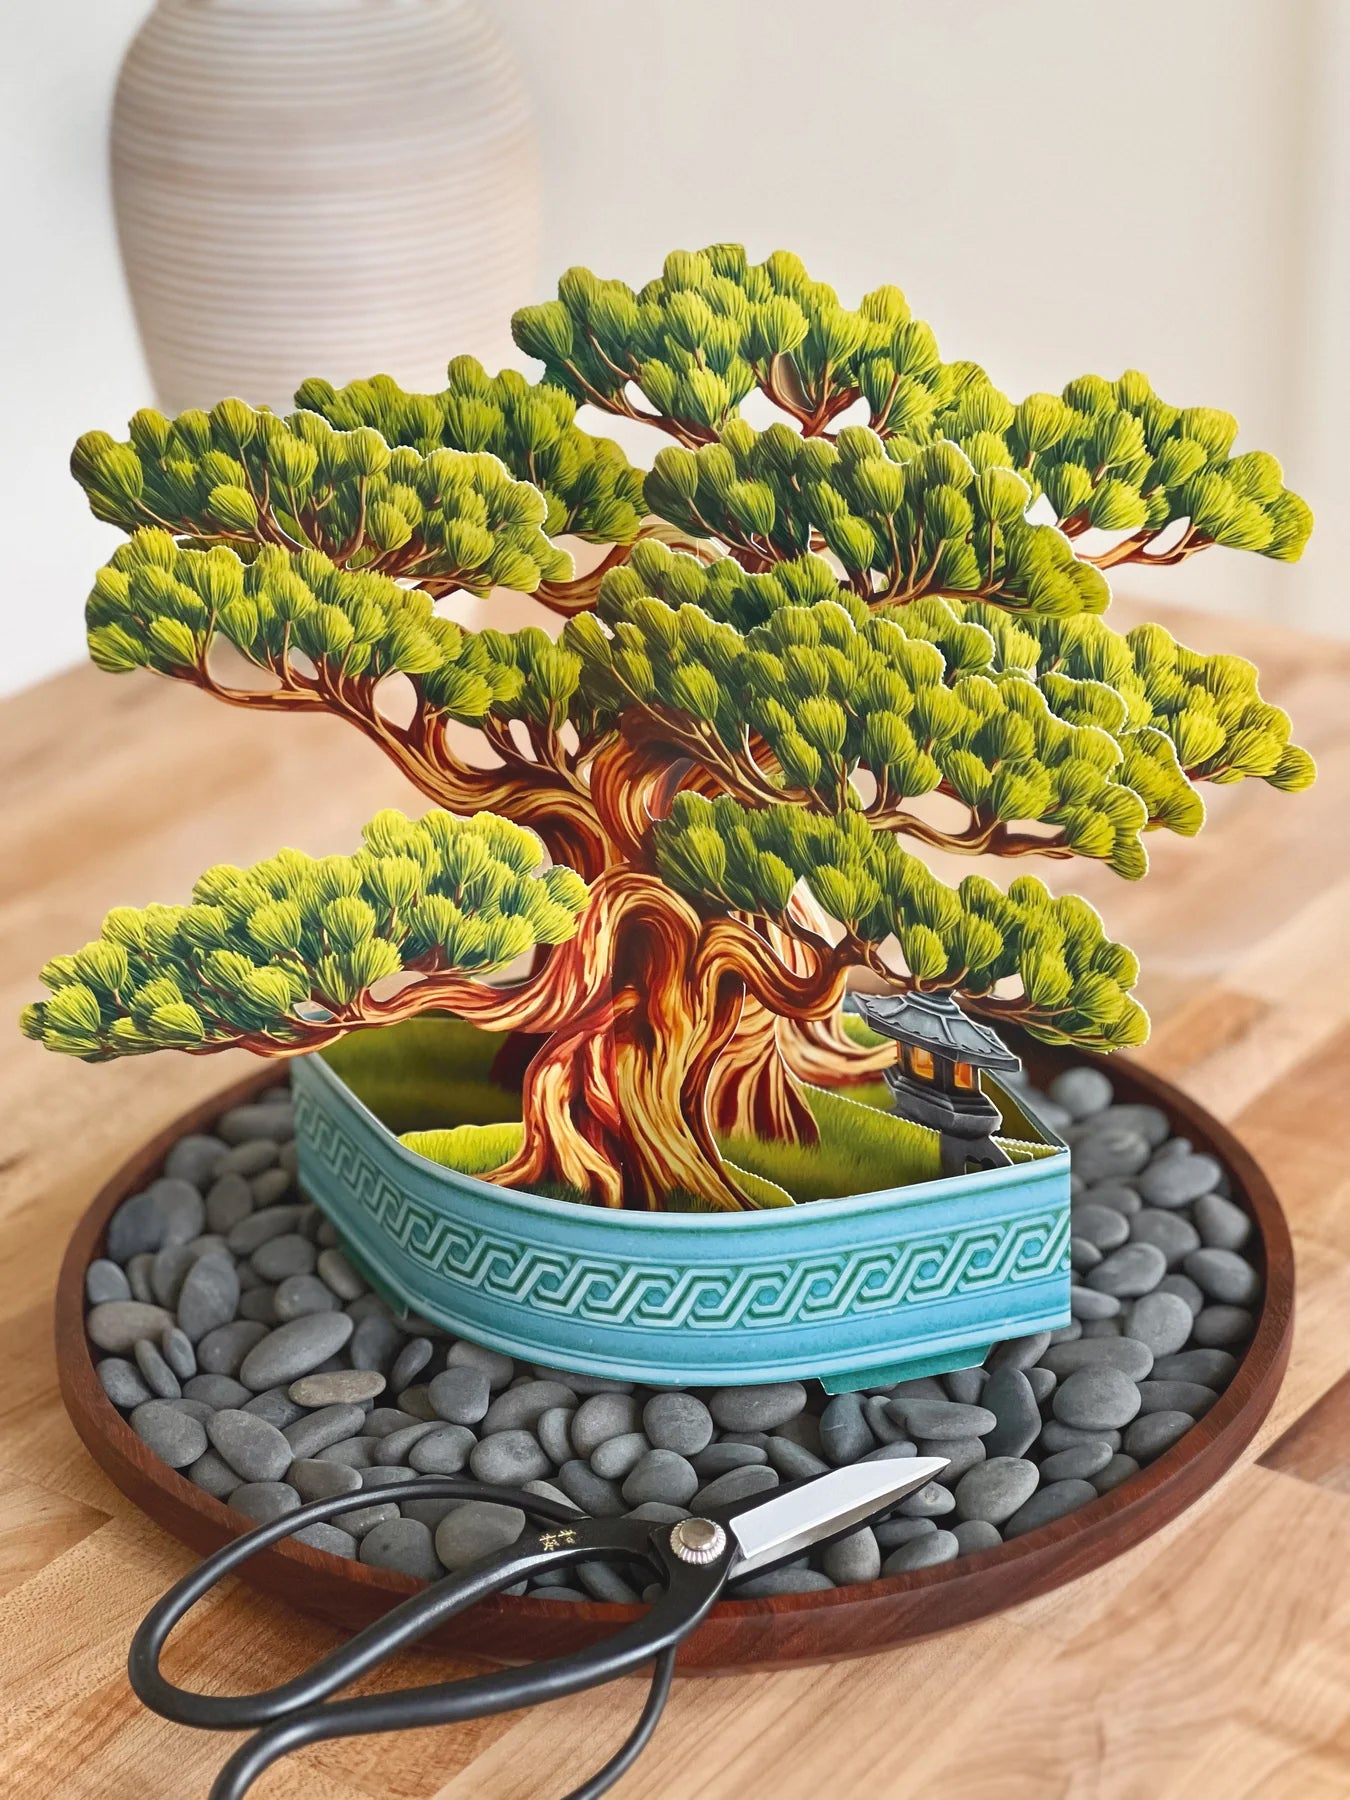 The Zen of a Bonsai tree: Mini magic - Today's Traveller - Travel & Tourism  News, Hotel & Holidays